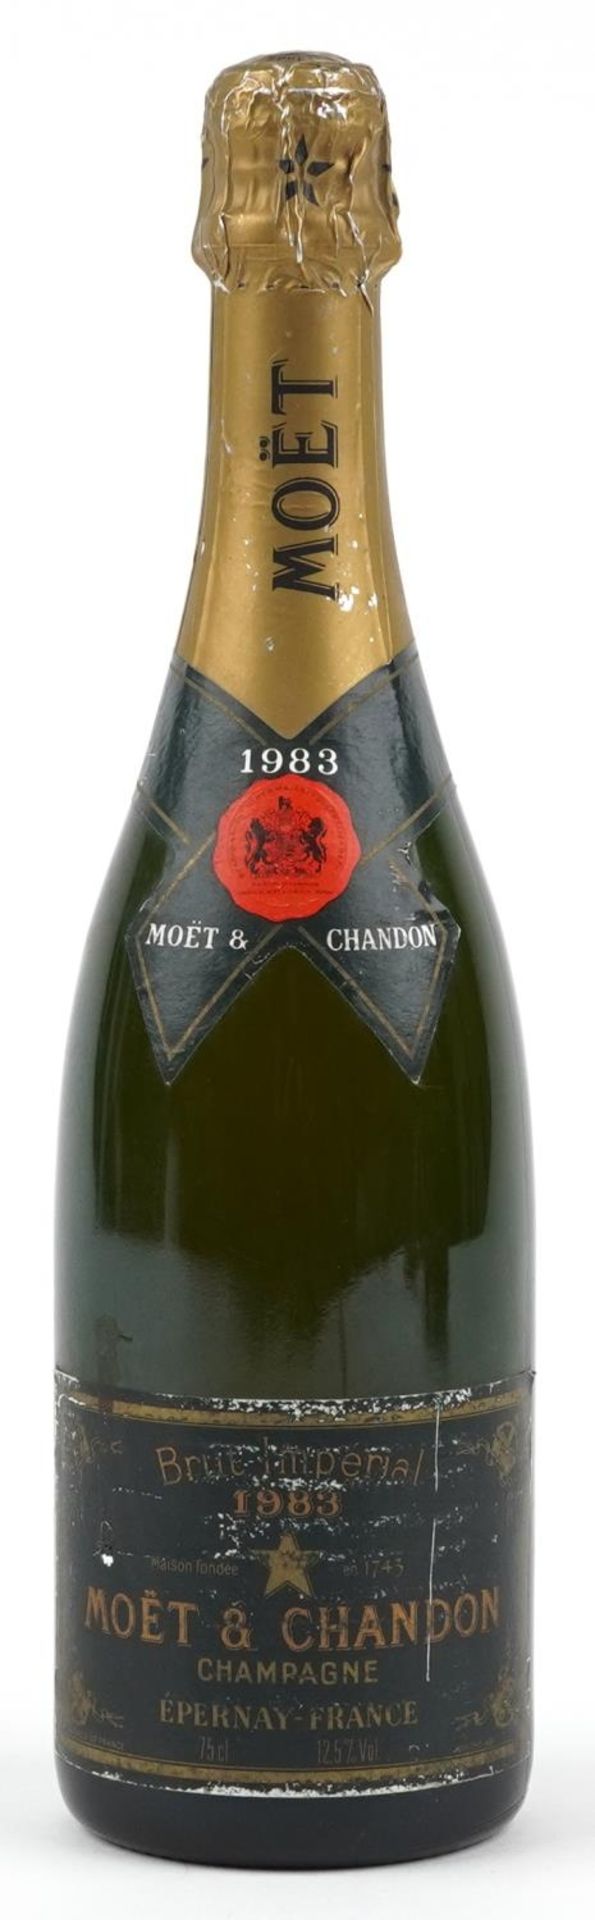 Bottle of Moet & Chandon 1983 Champagne